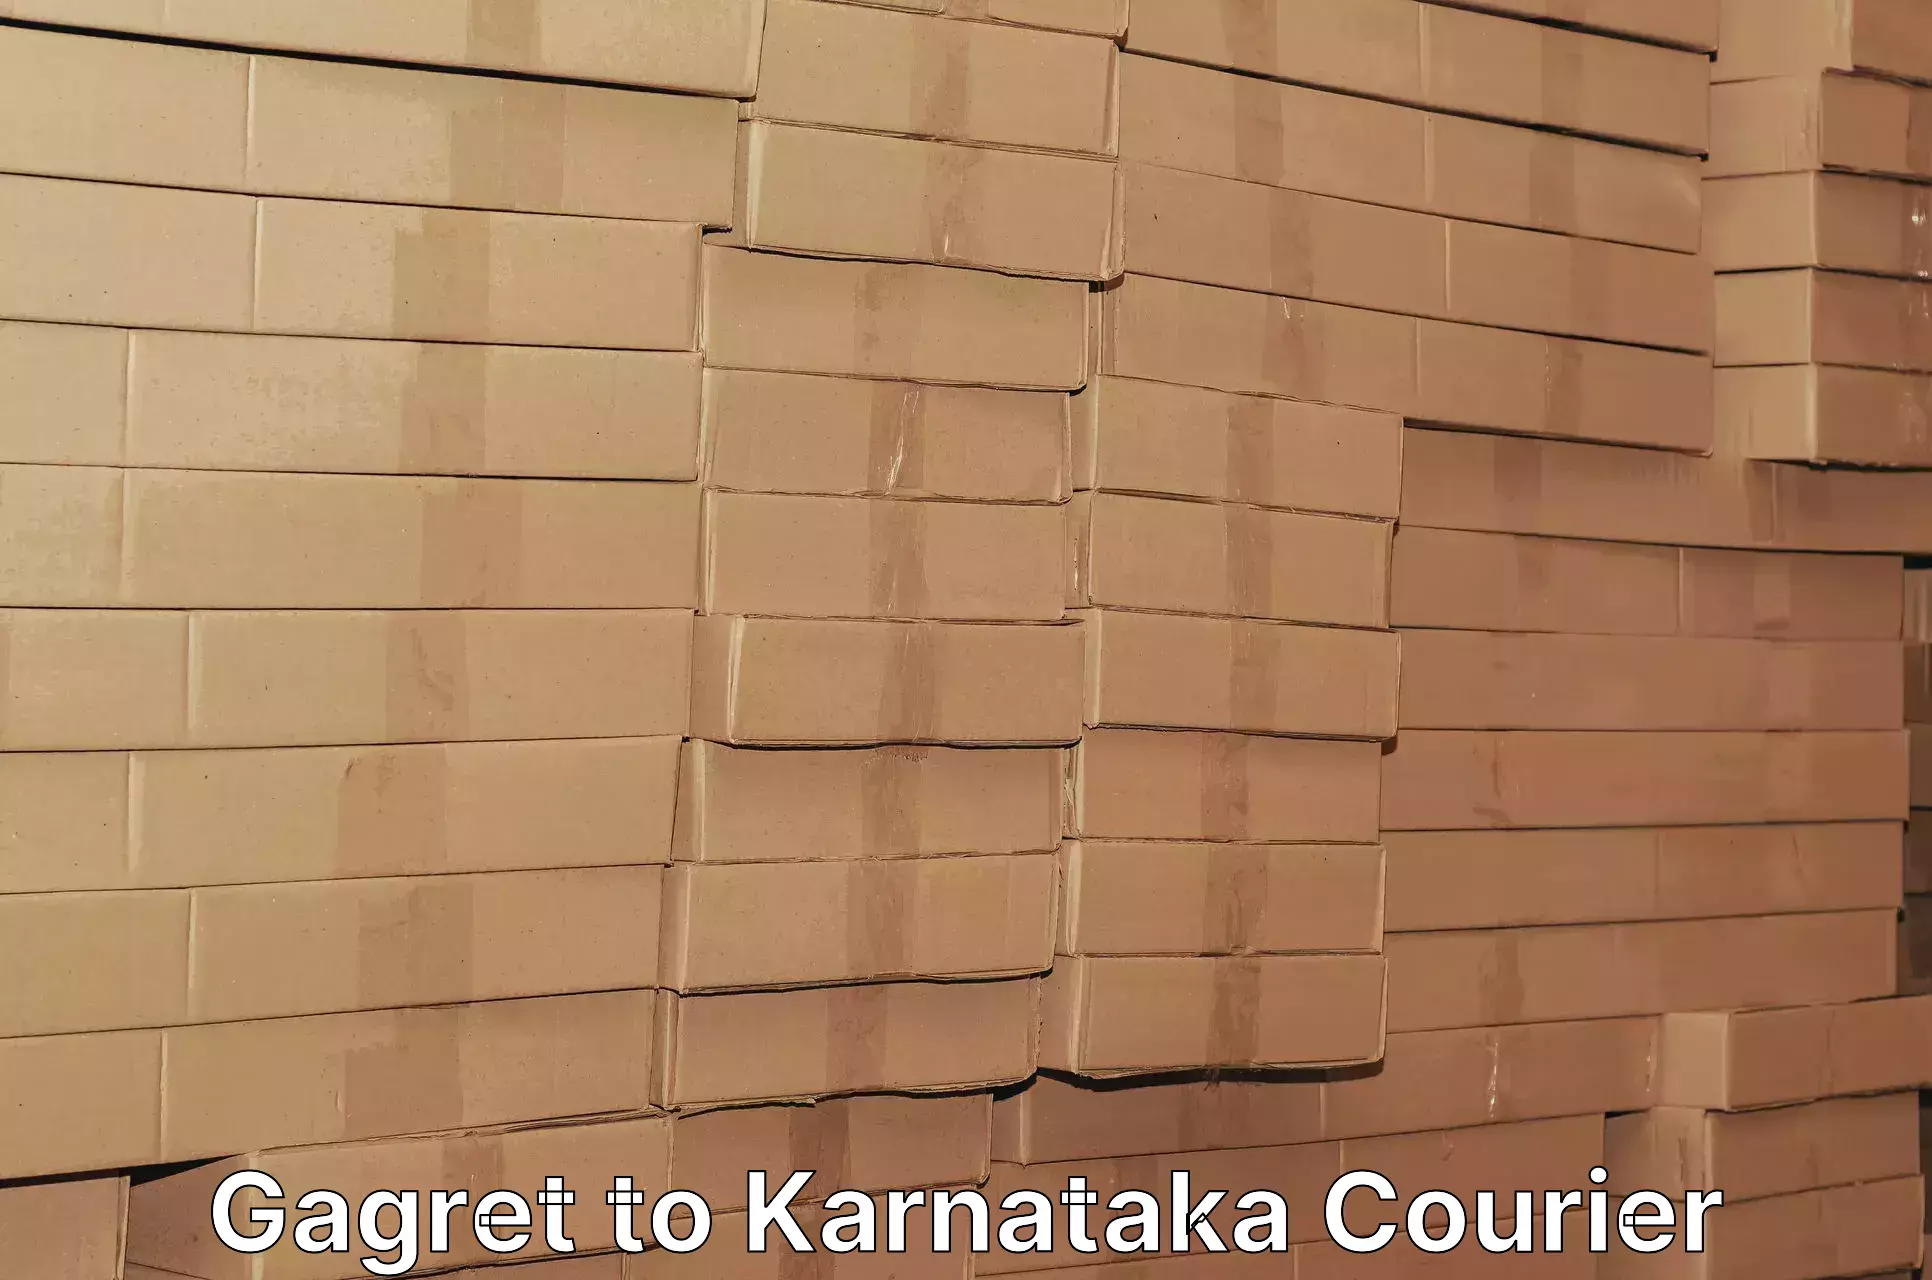 Advanced shipping technology Gagret to Karnataka